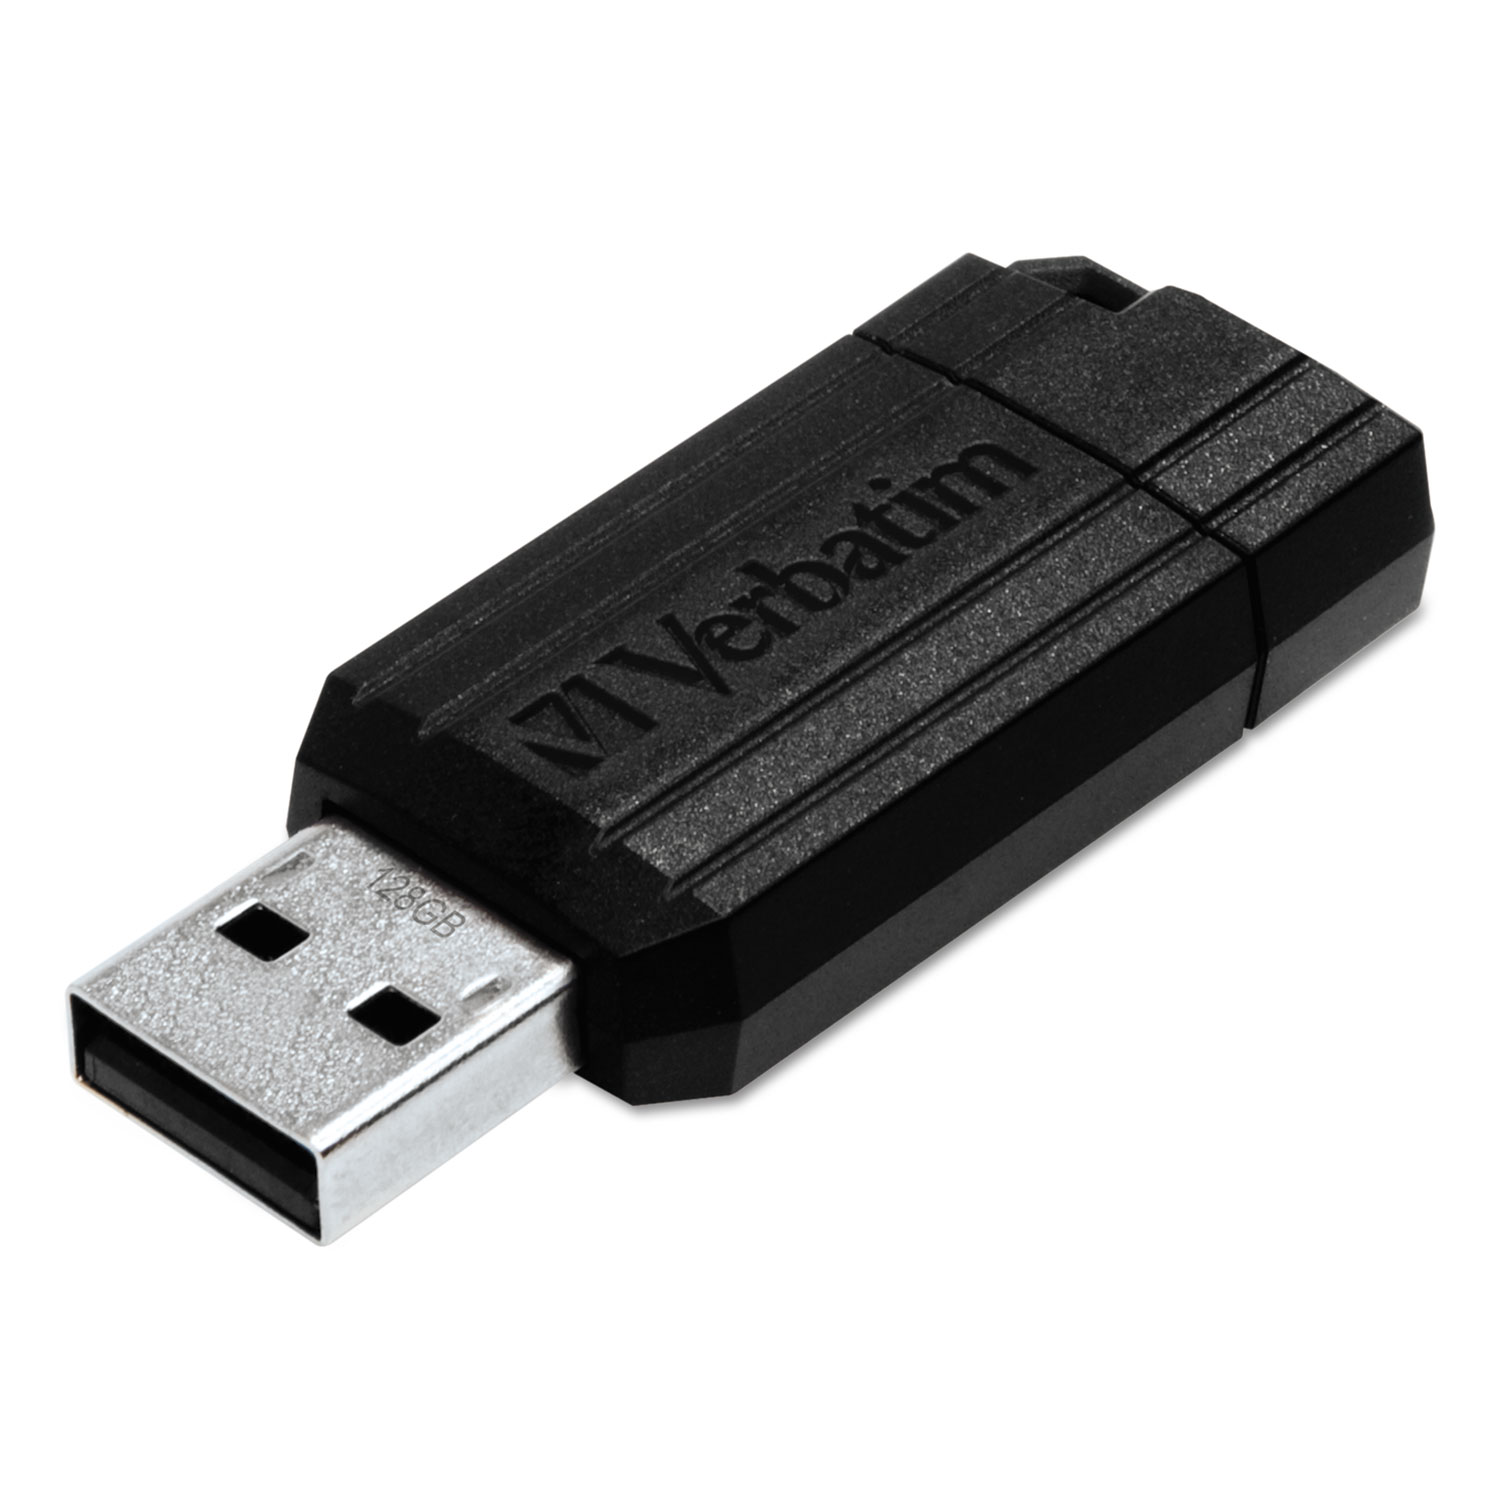  Verbatim 49062 PinStripe USB Flash Drive, 8 GB, Black (VER49062) 